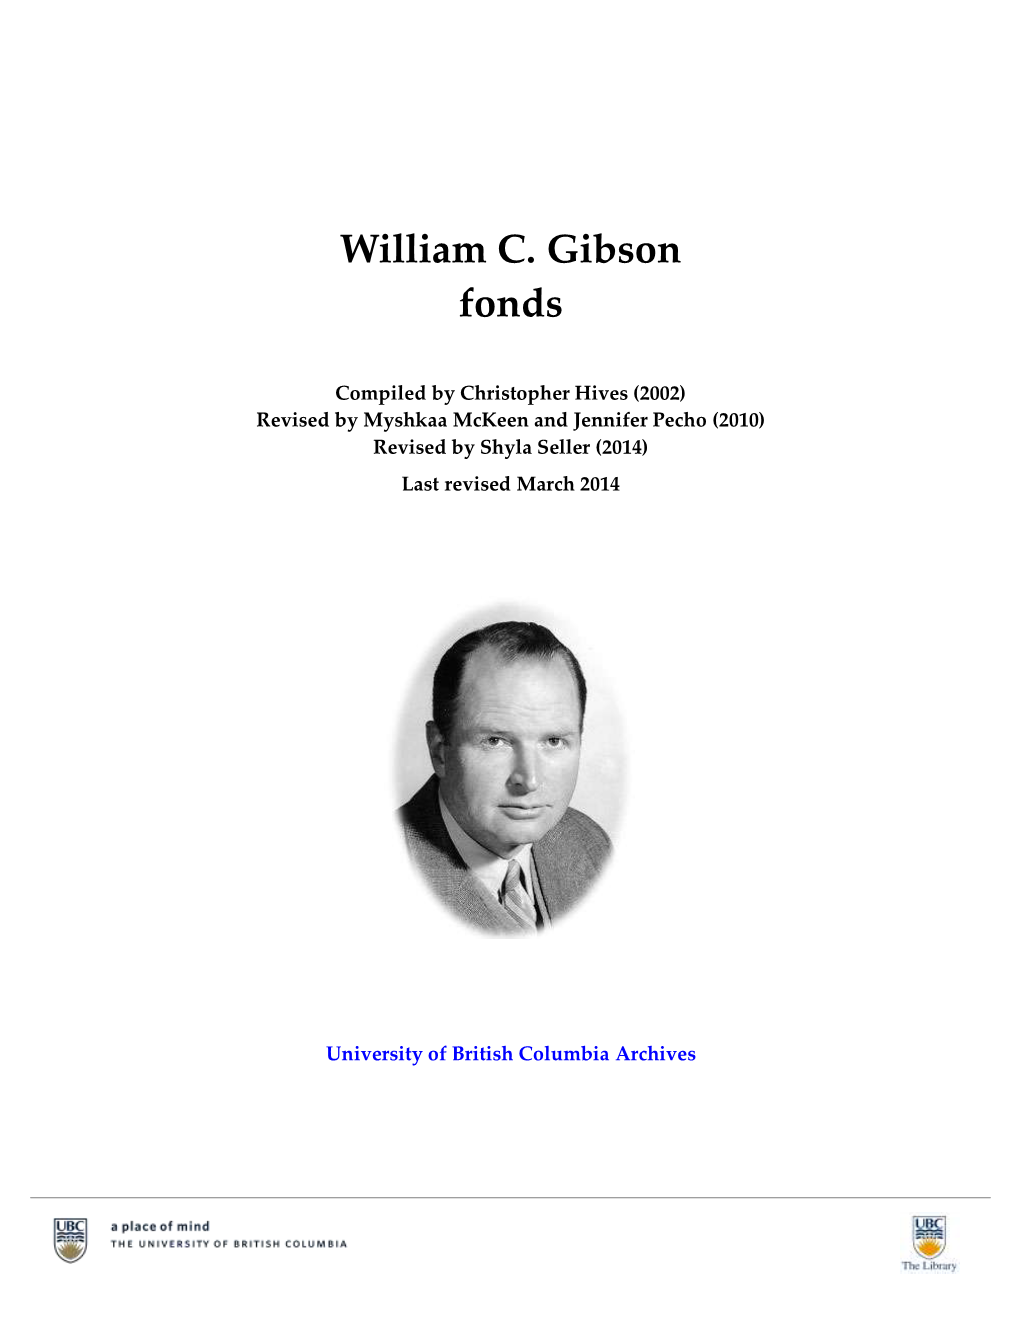 William C. Gibson Fonds